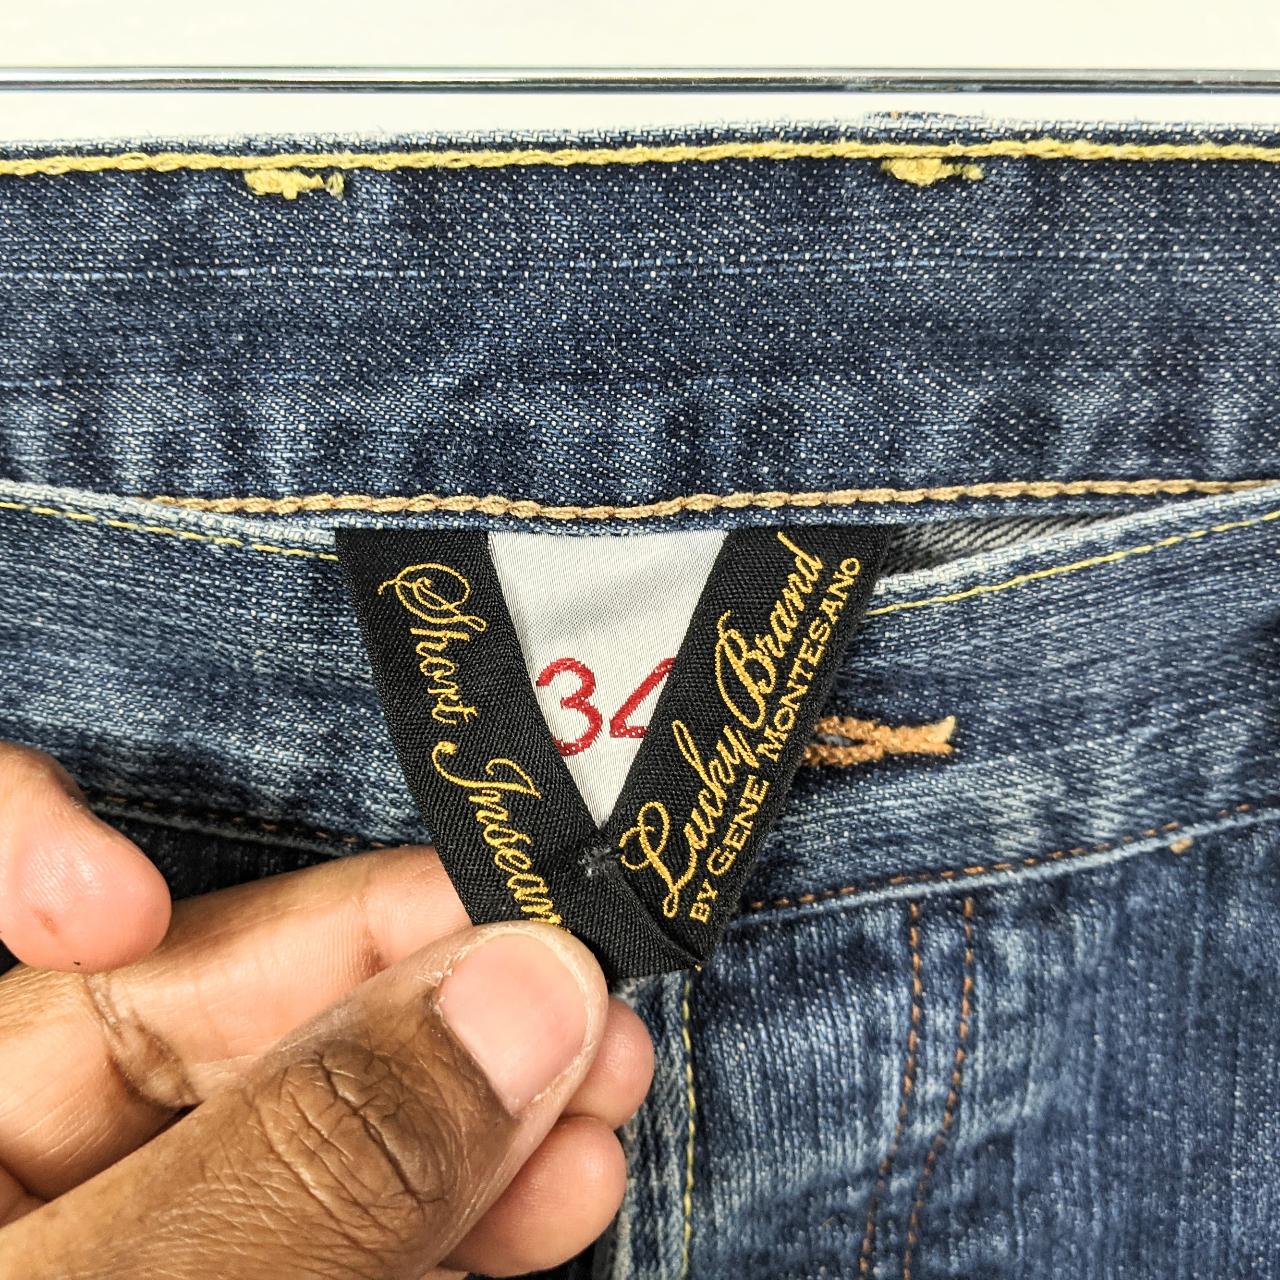 Lucky Brand Jeans by Gene Montesano Mens Bootcut - Depop